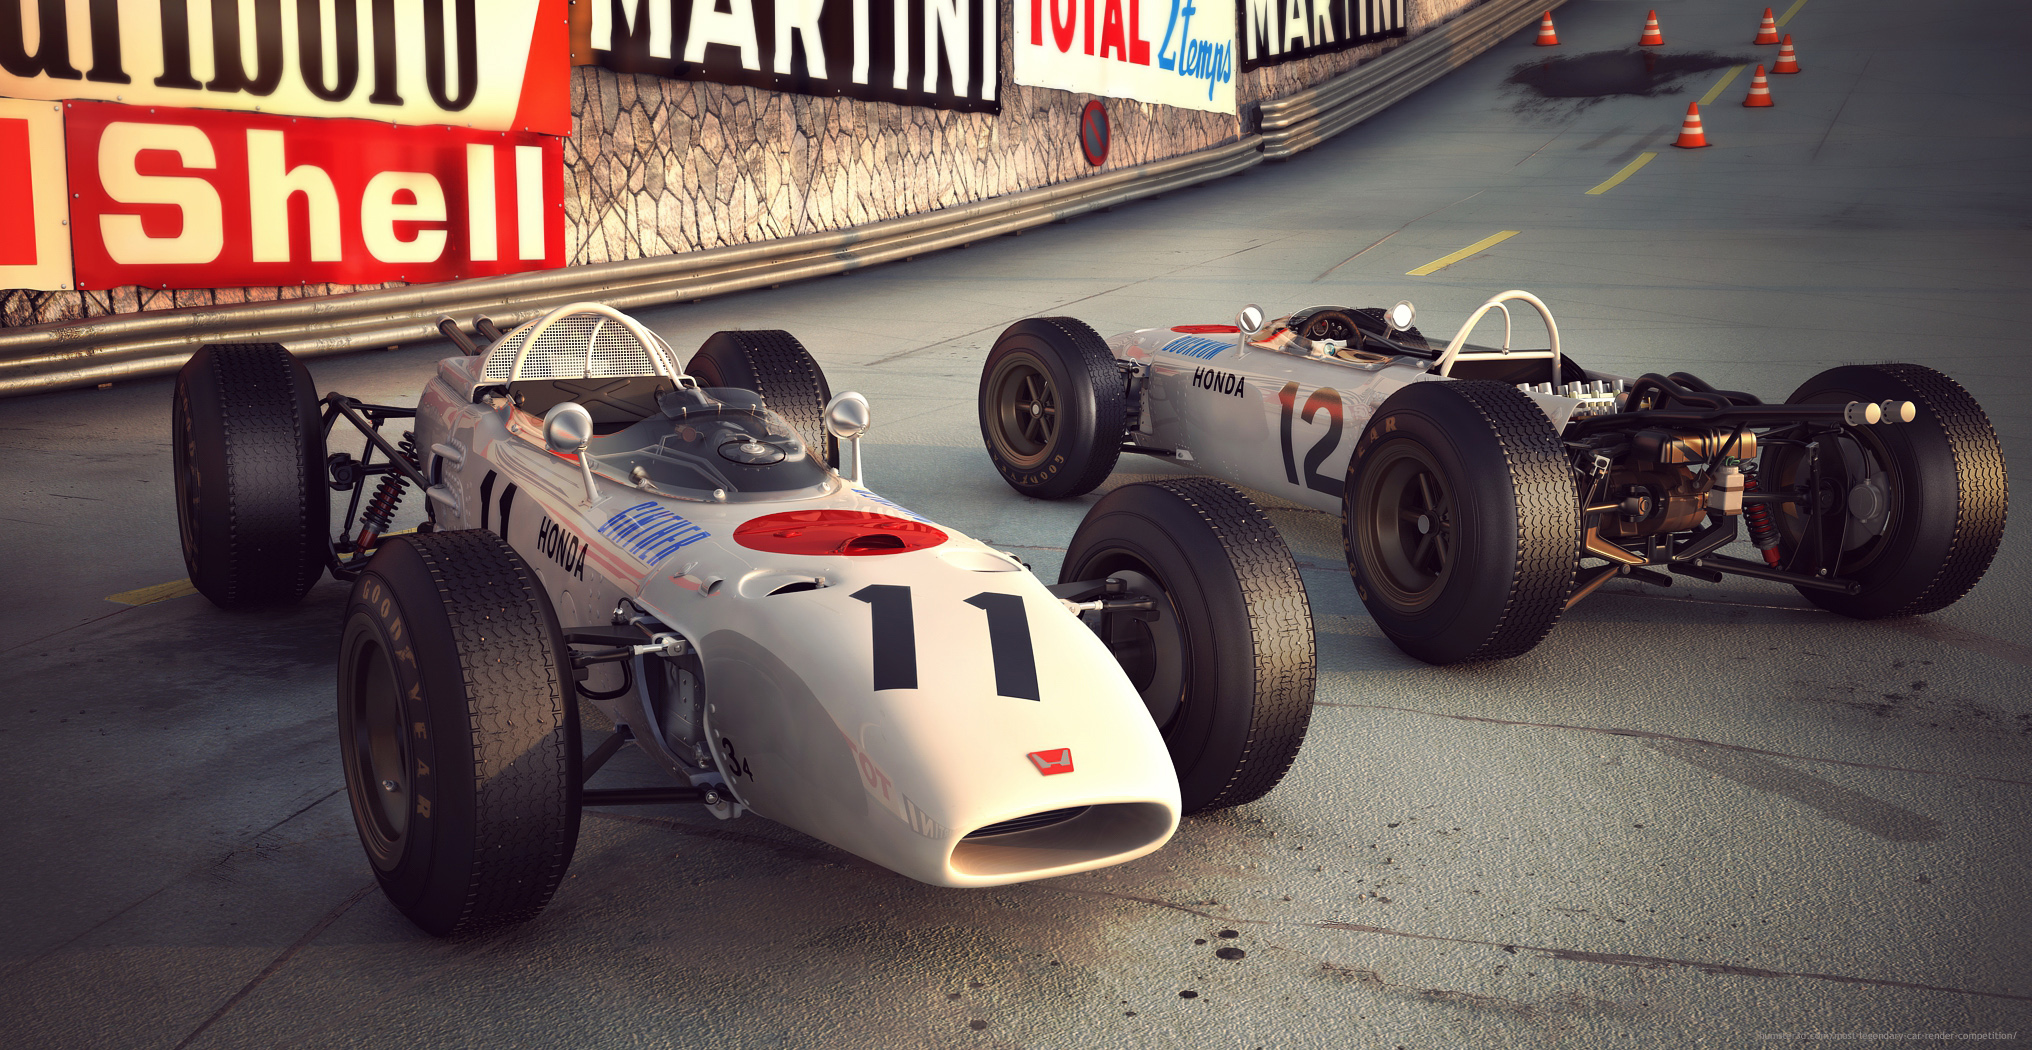 Hondas first Formula One race car won in 1965